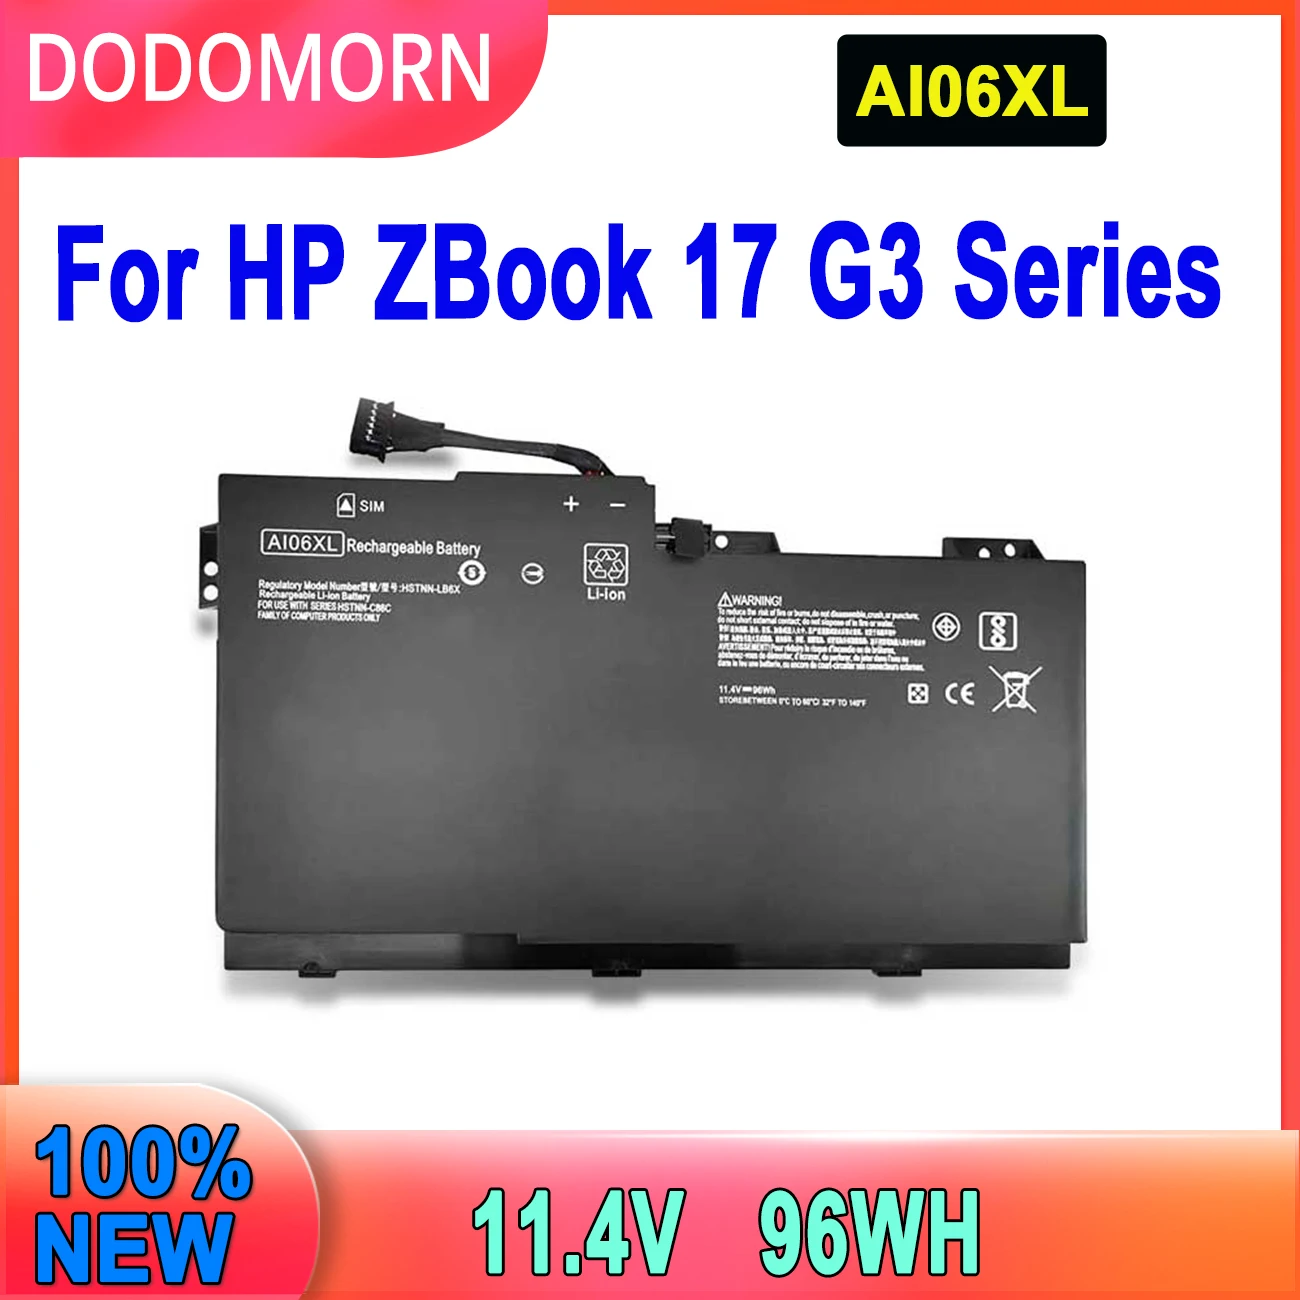 

DODOMORN New Laptop Battery AI06XL For HP ZBook 17 G3 Series Notebook Laptop 808397-421 AI06096XL HSTNN-LB6X 11.4V 96WH